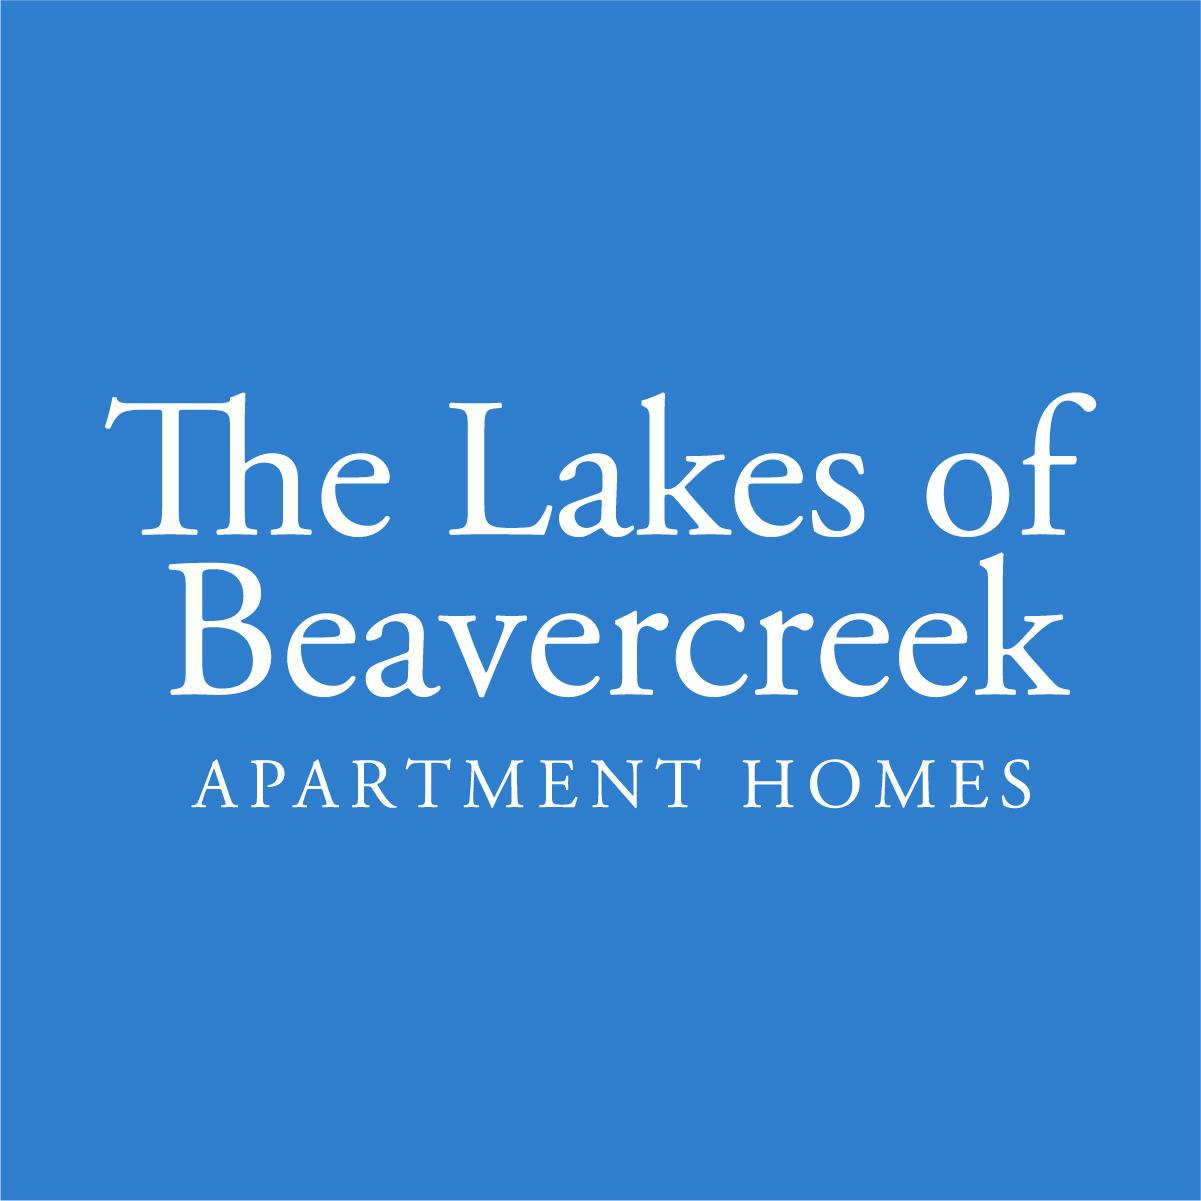 The Lakes of Beavercreek